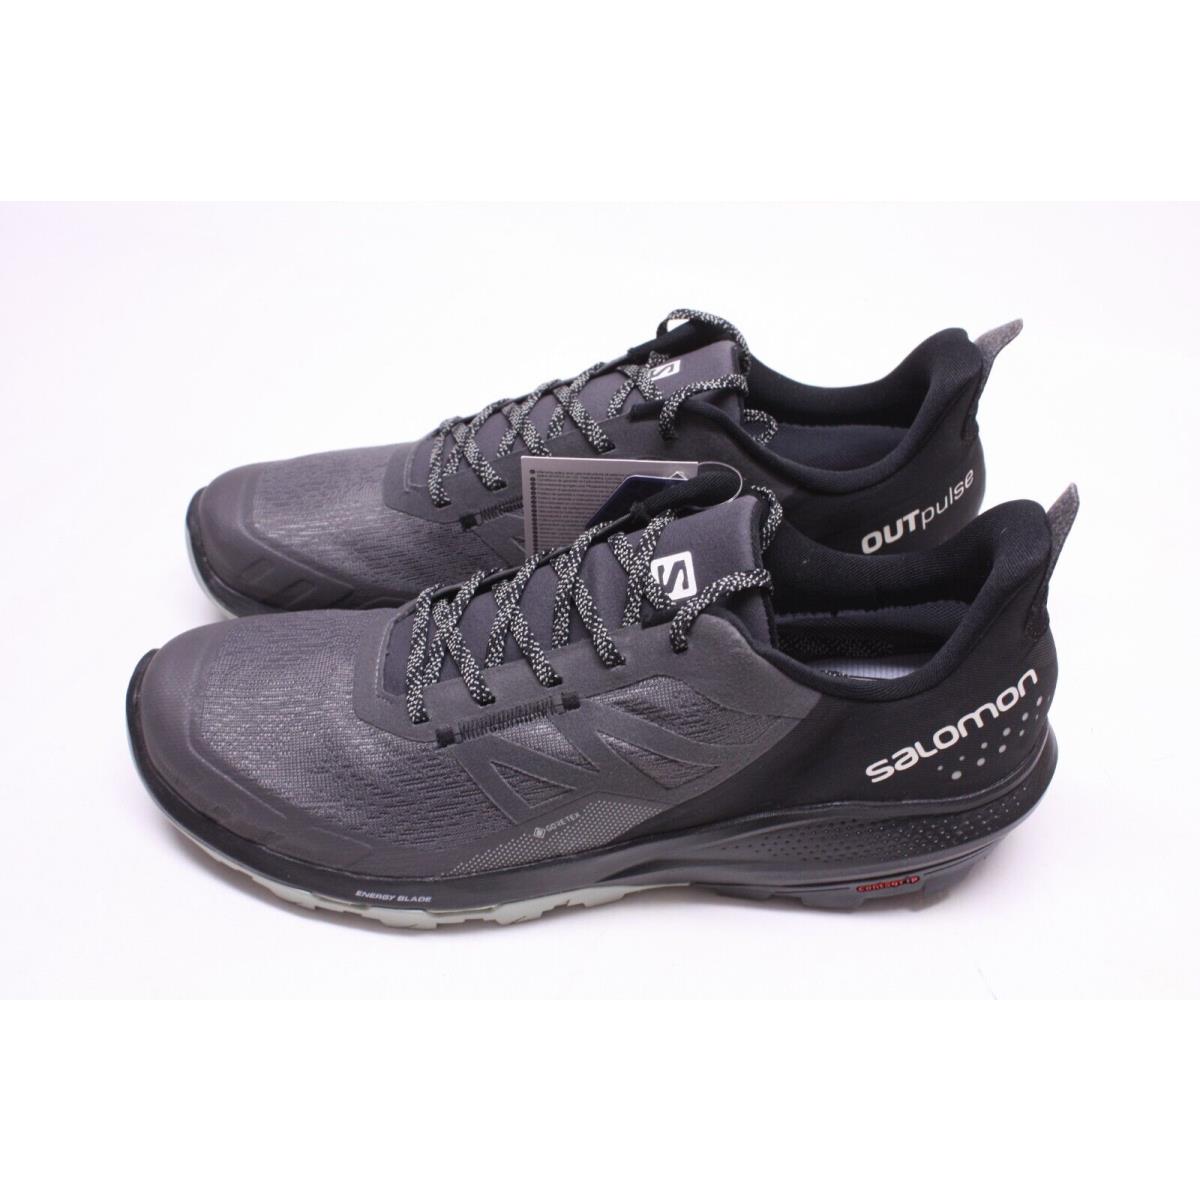 Salomon Outpulse Gtx Gore-tex Men`s Hiking Shoe Size 13 415878 38 V0